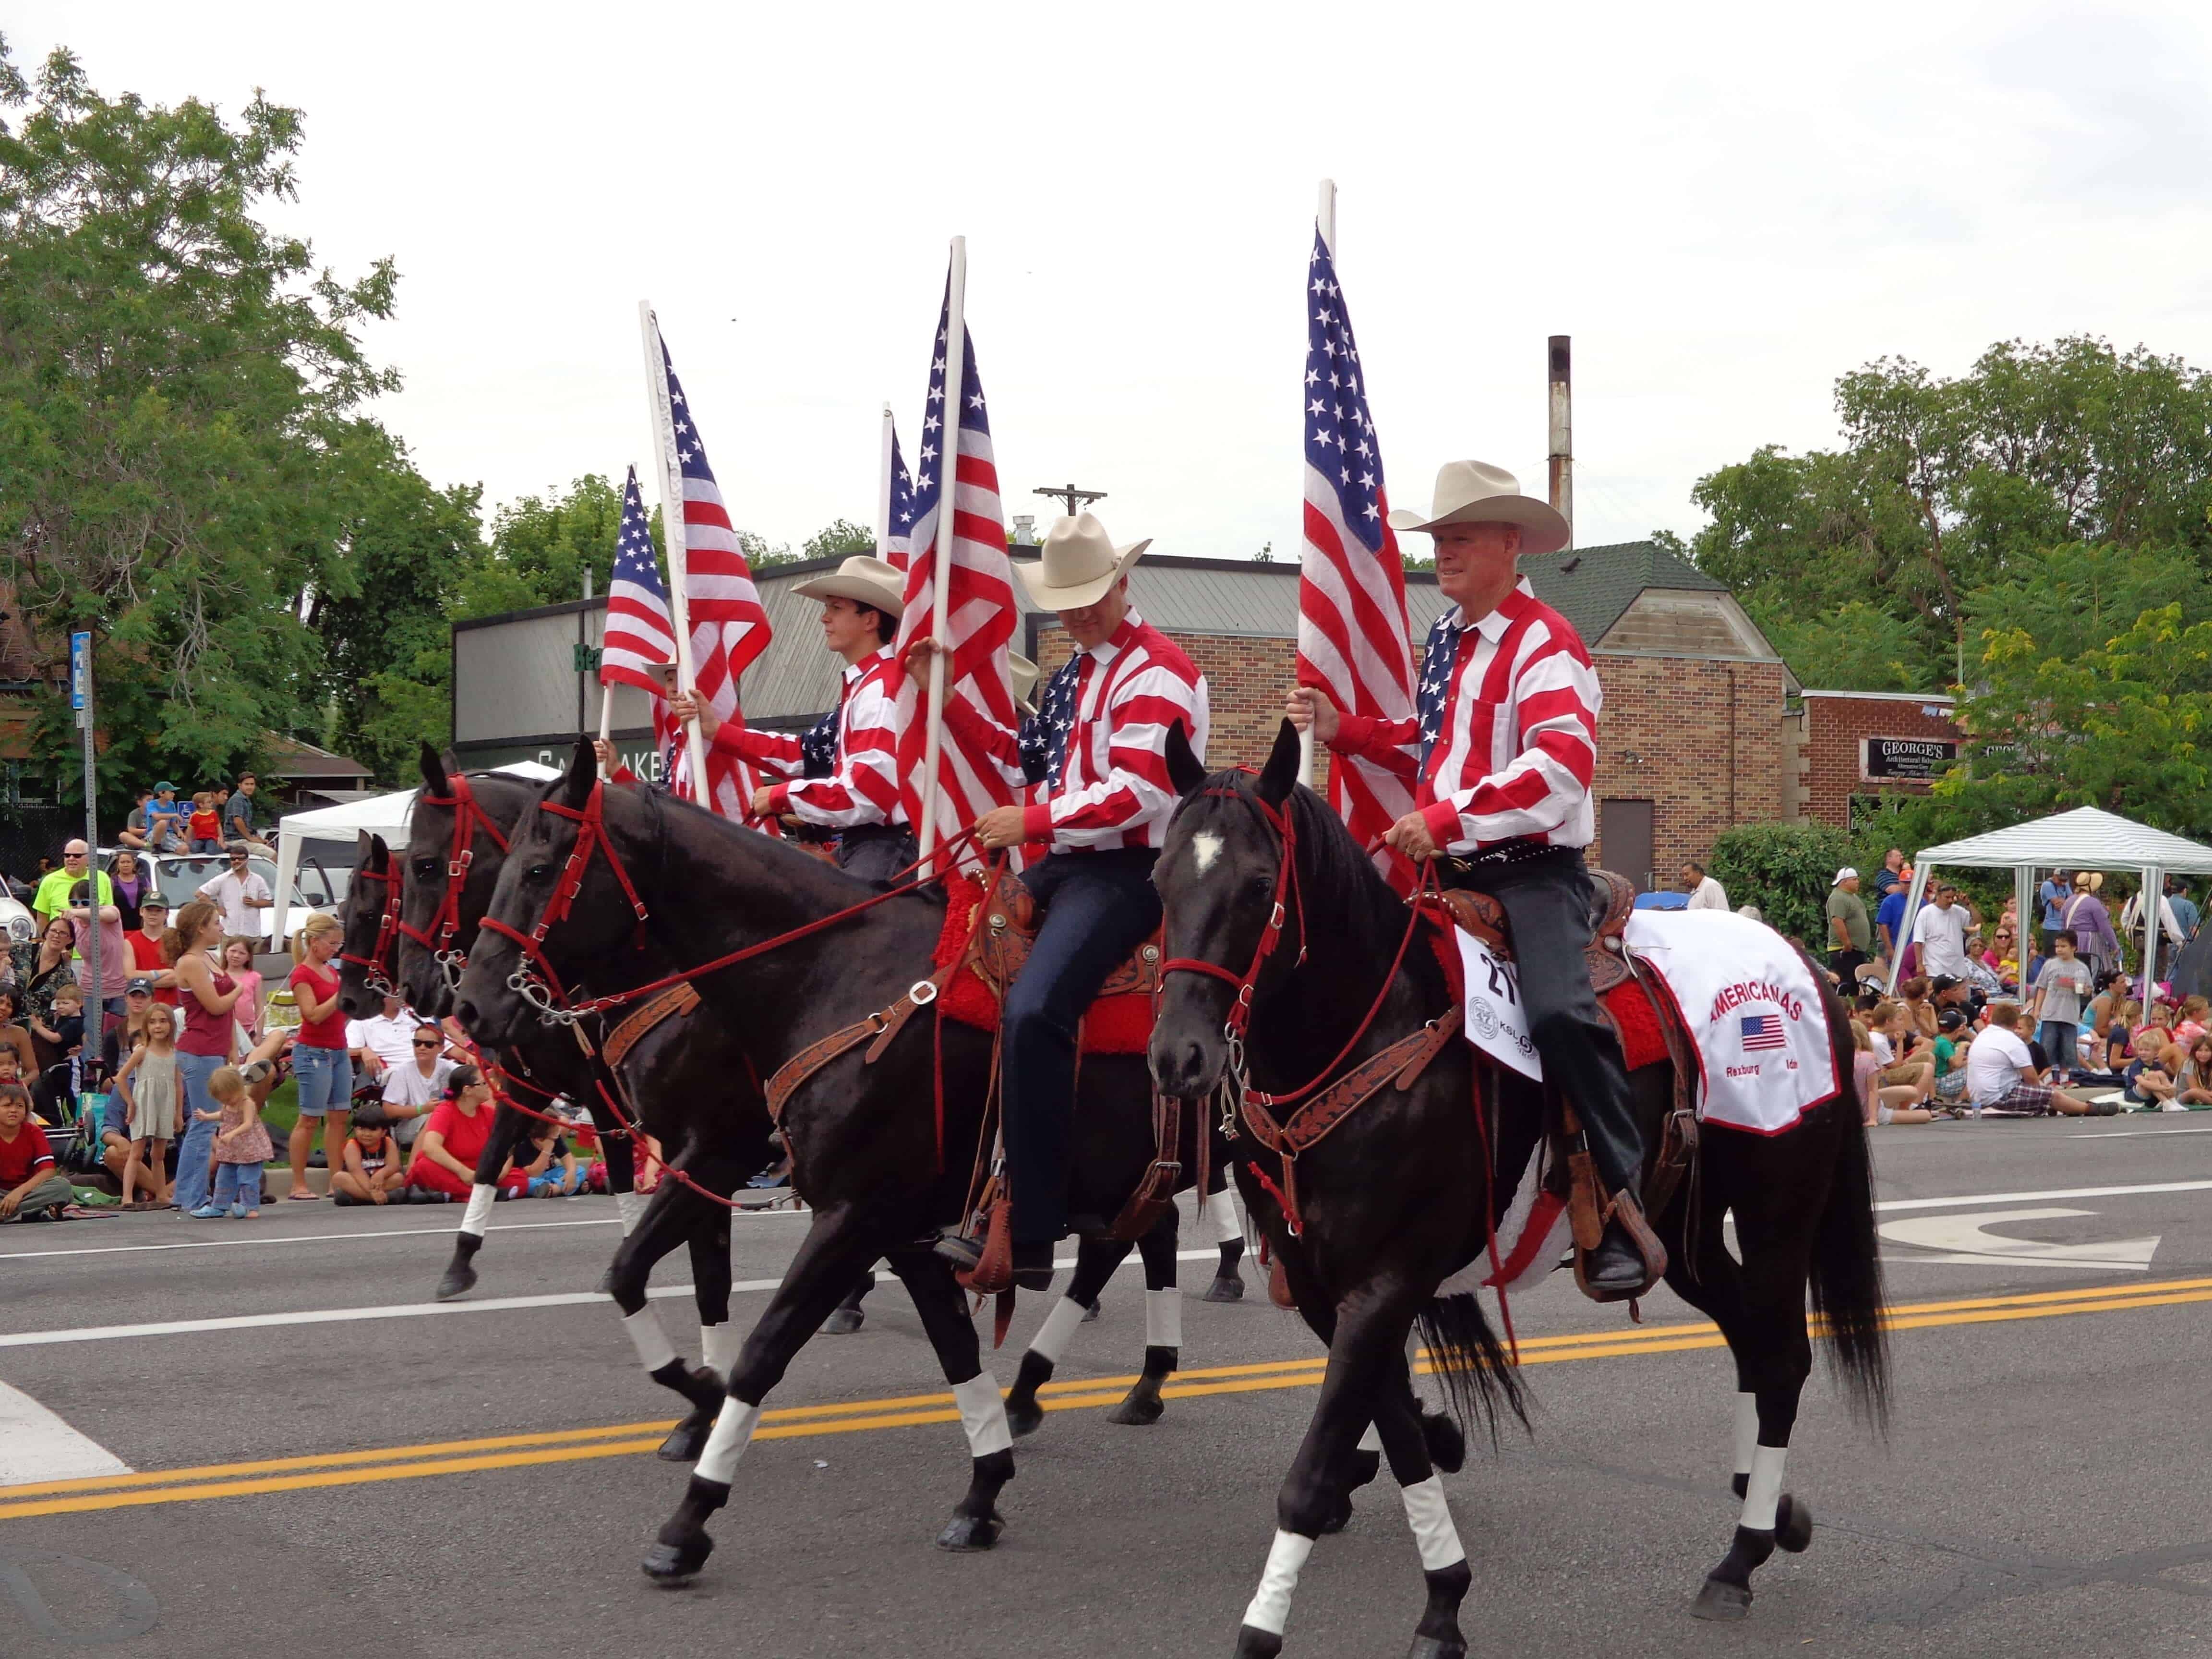 American "Annuity" Riders On Horseback